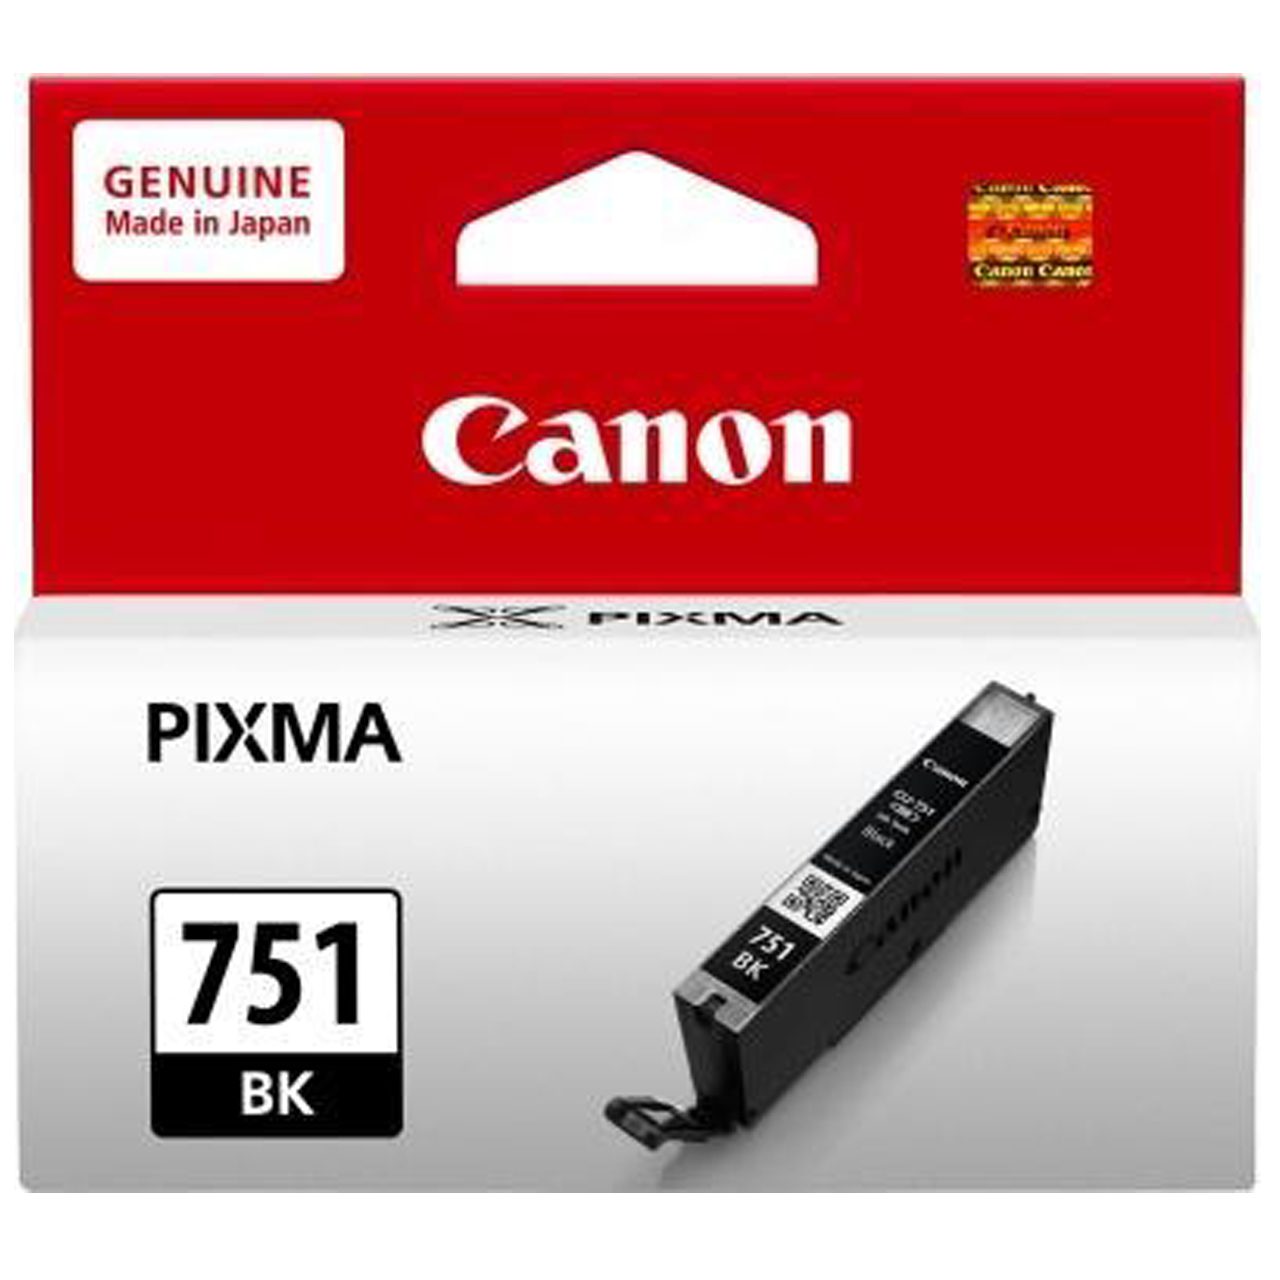 Canon Pixma CLI 751 Black Cartridge | Office Shop | OfficeSupplies